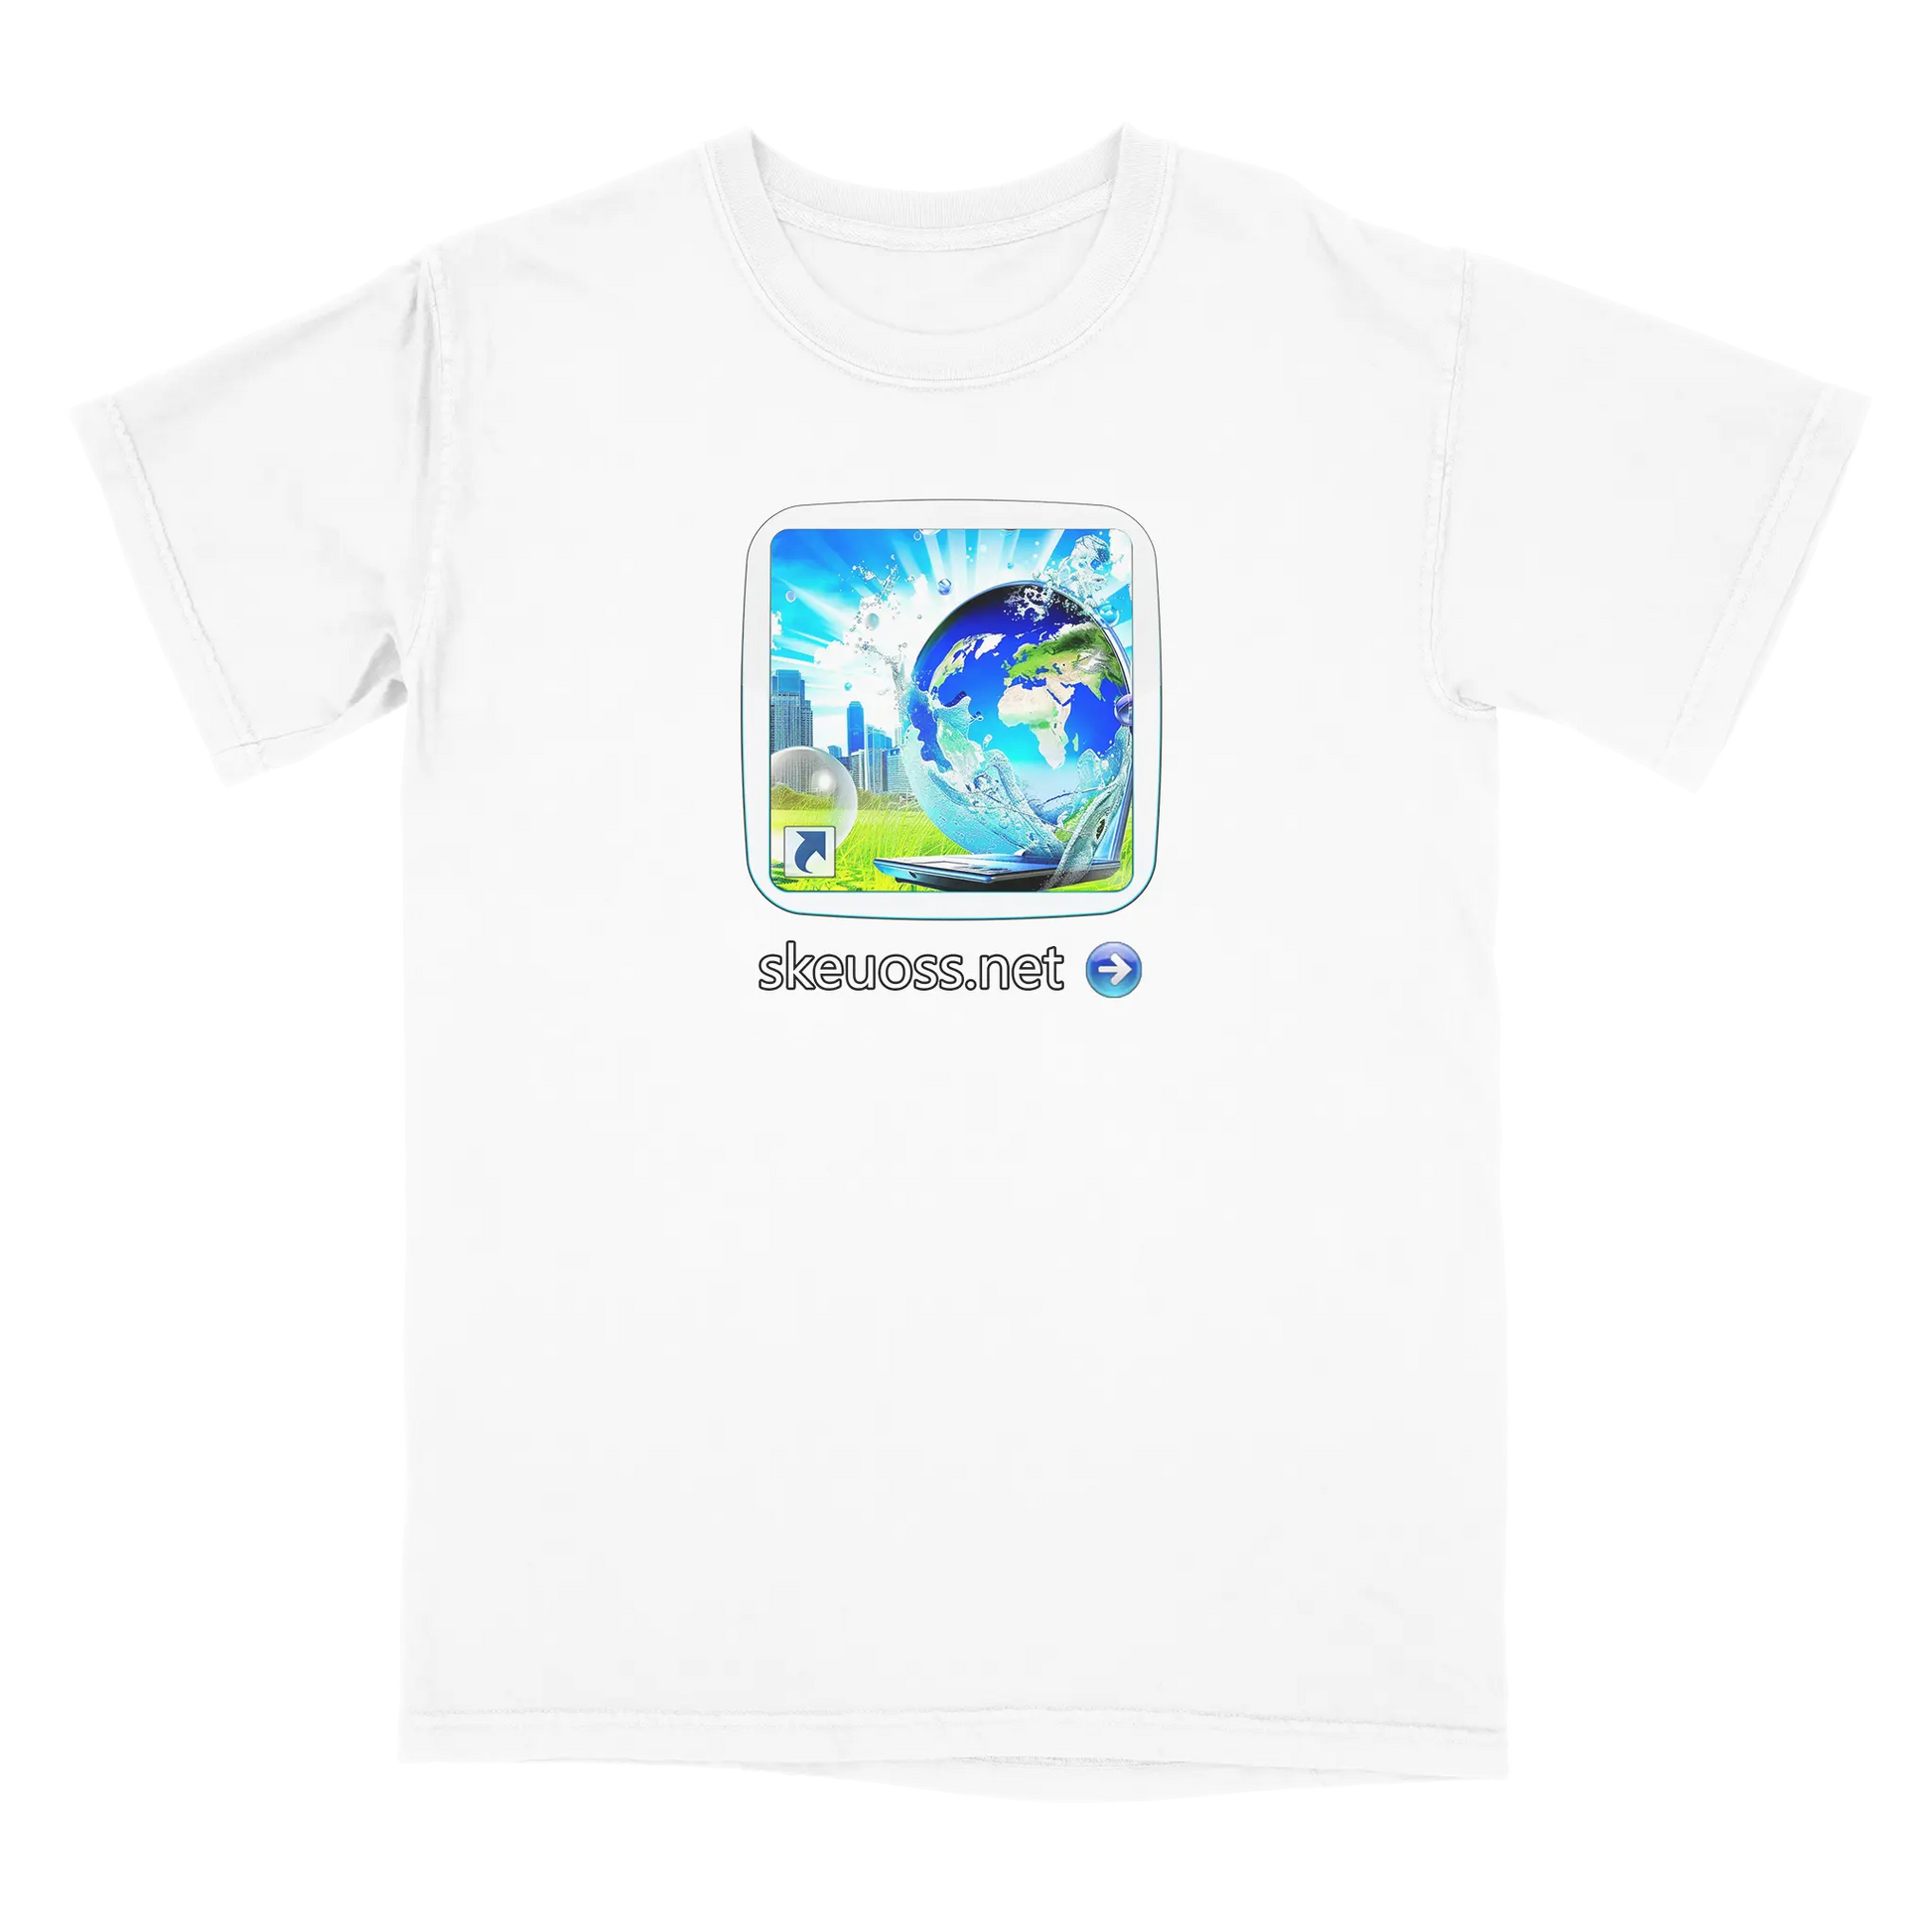 Frutiger Aero T-shirt - User Login Collection - User 365